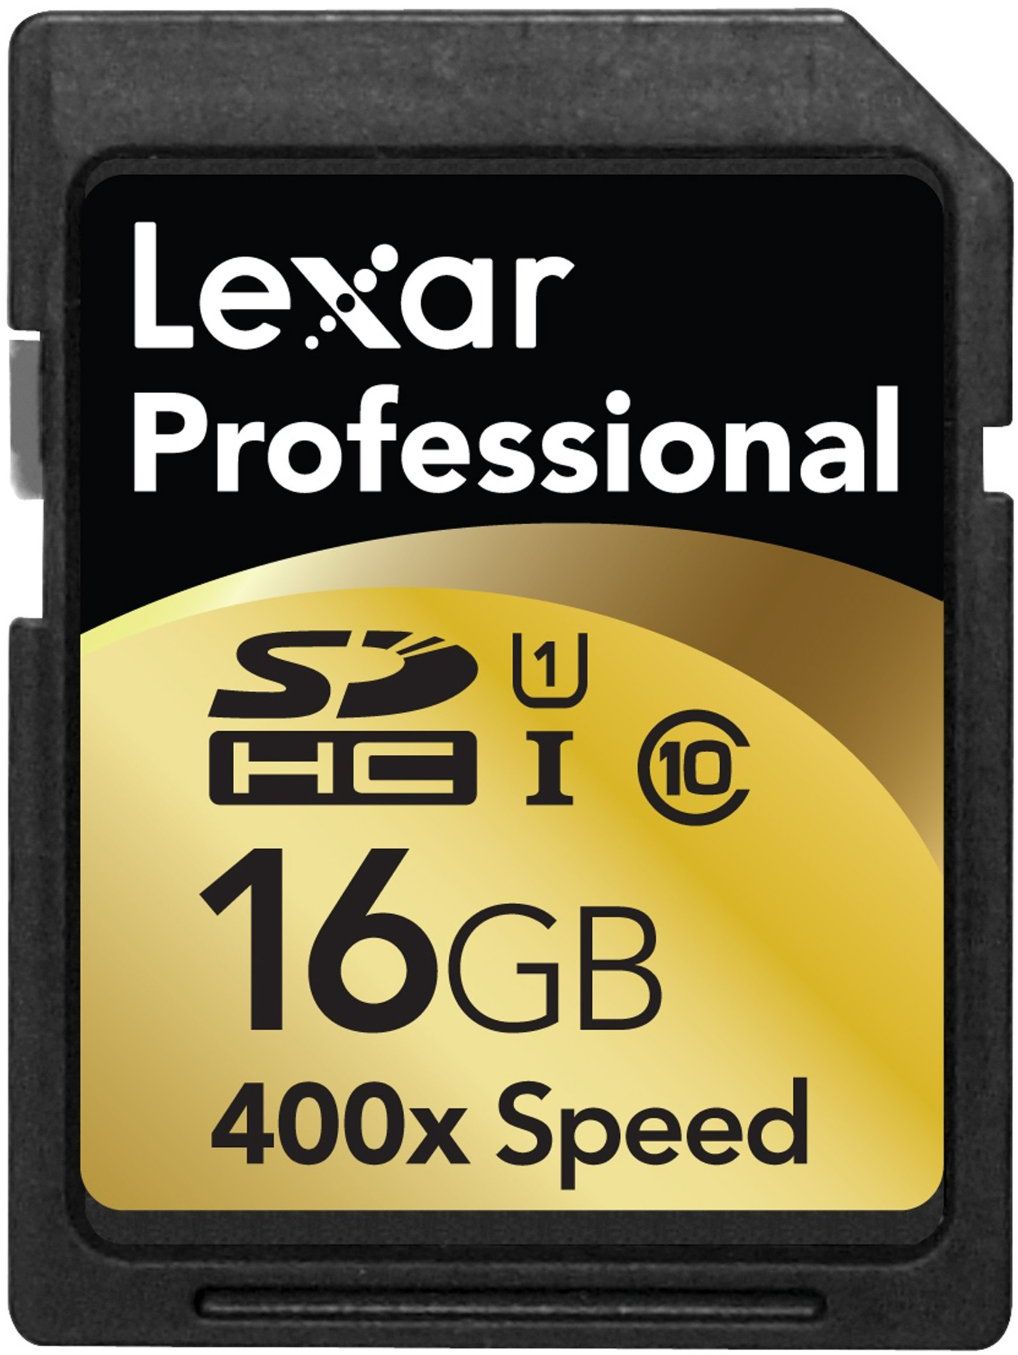 Lexar Professional 400x SDHC UHS-I CLASS 10 - 16GB